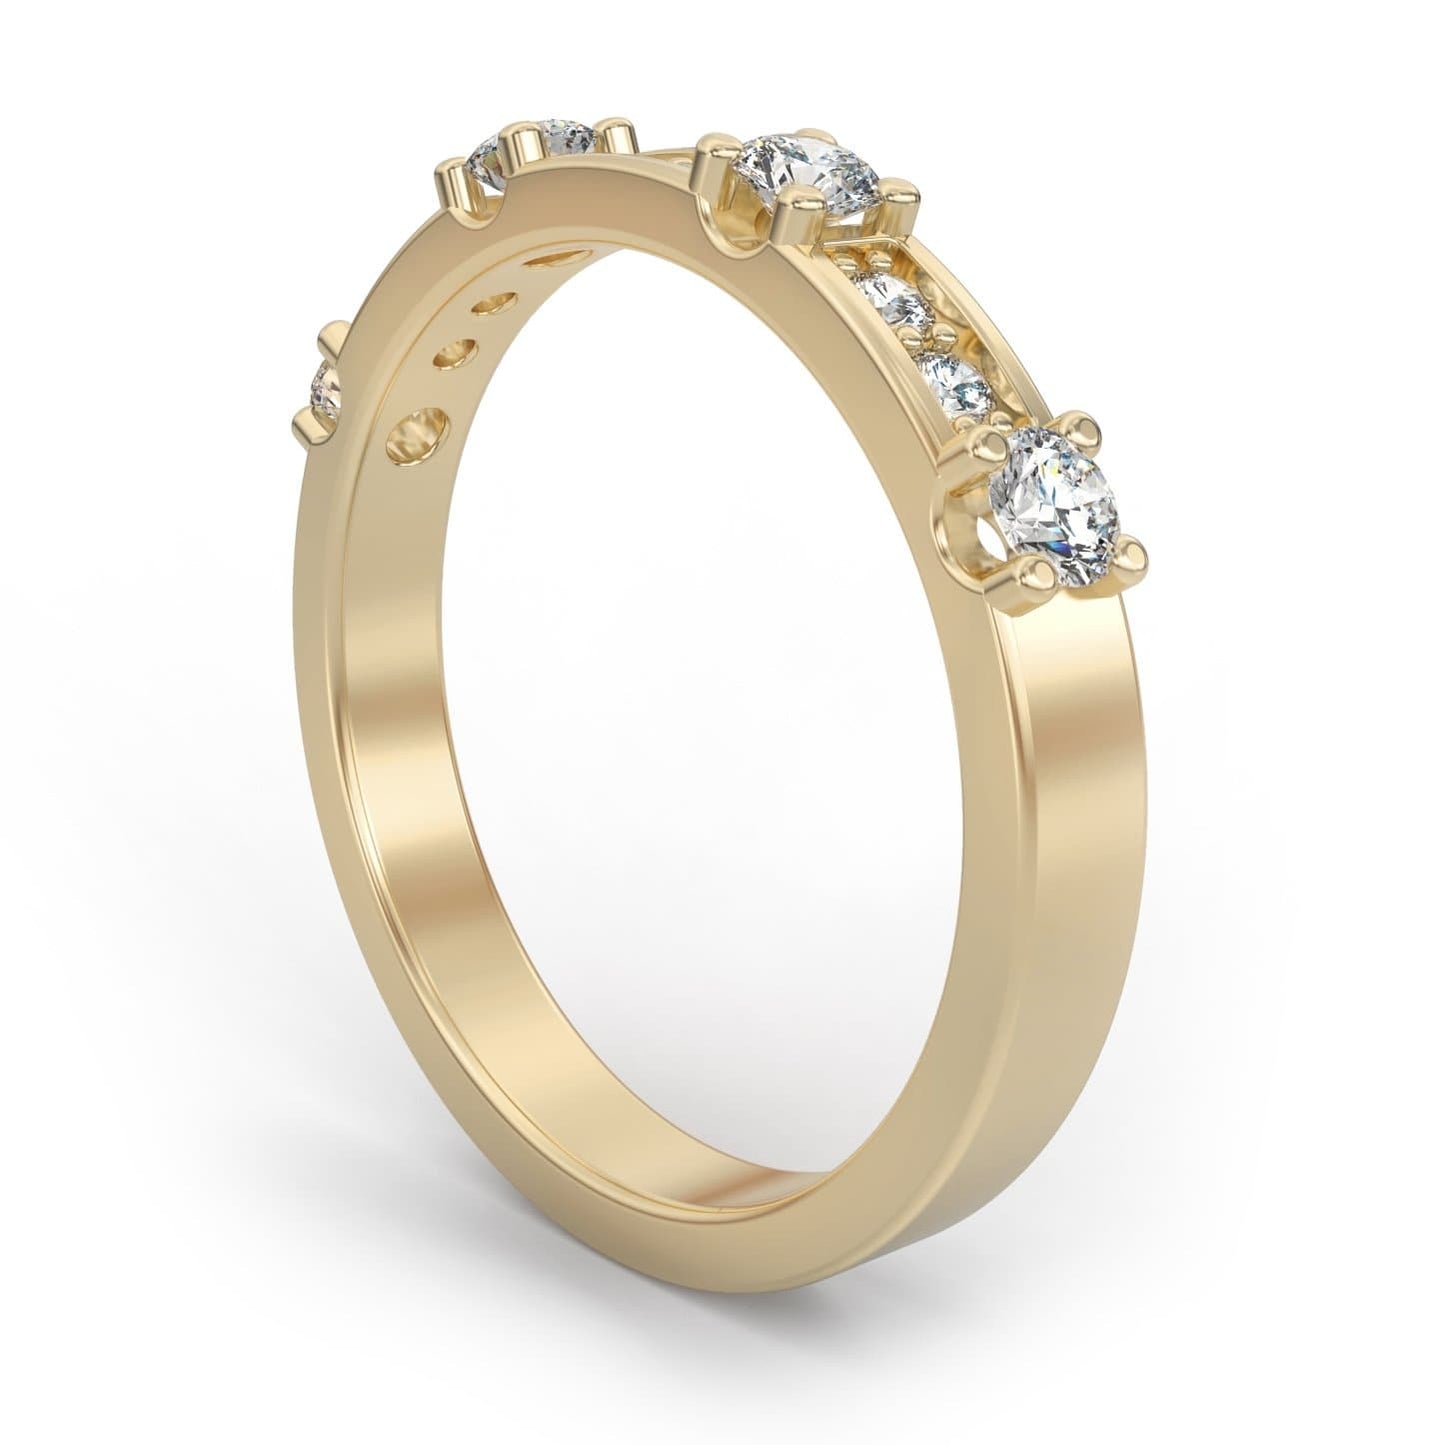 Unique Pattern Diamond Ring in 14k Gold